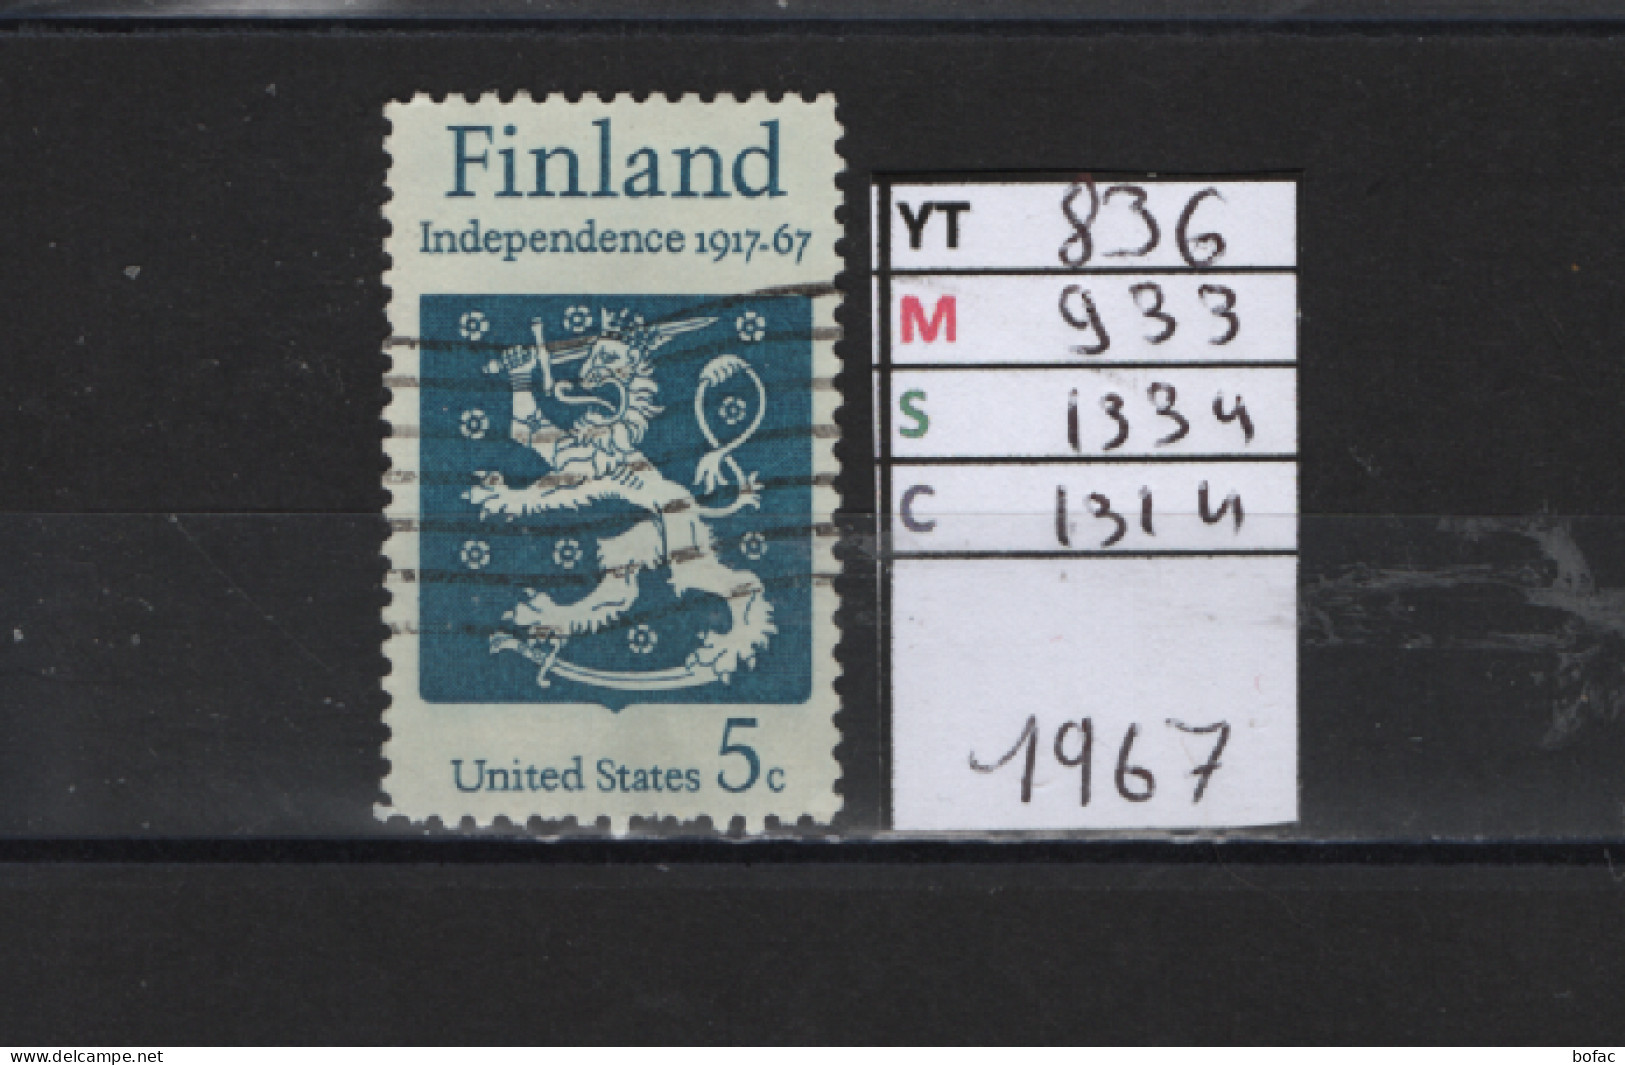 PRIX FIXE Obl  836 YT 933 MIC 1334 SCO 1314 GIB Indépendance De La Finland Finlande 1967 Etats Unis  58A/12 - Gebraucht